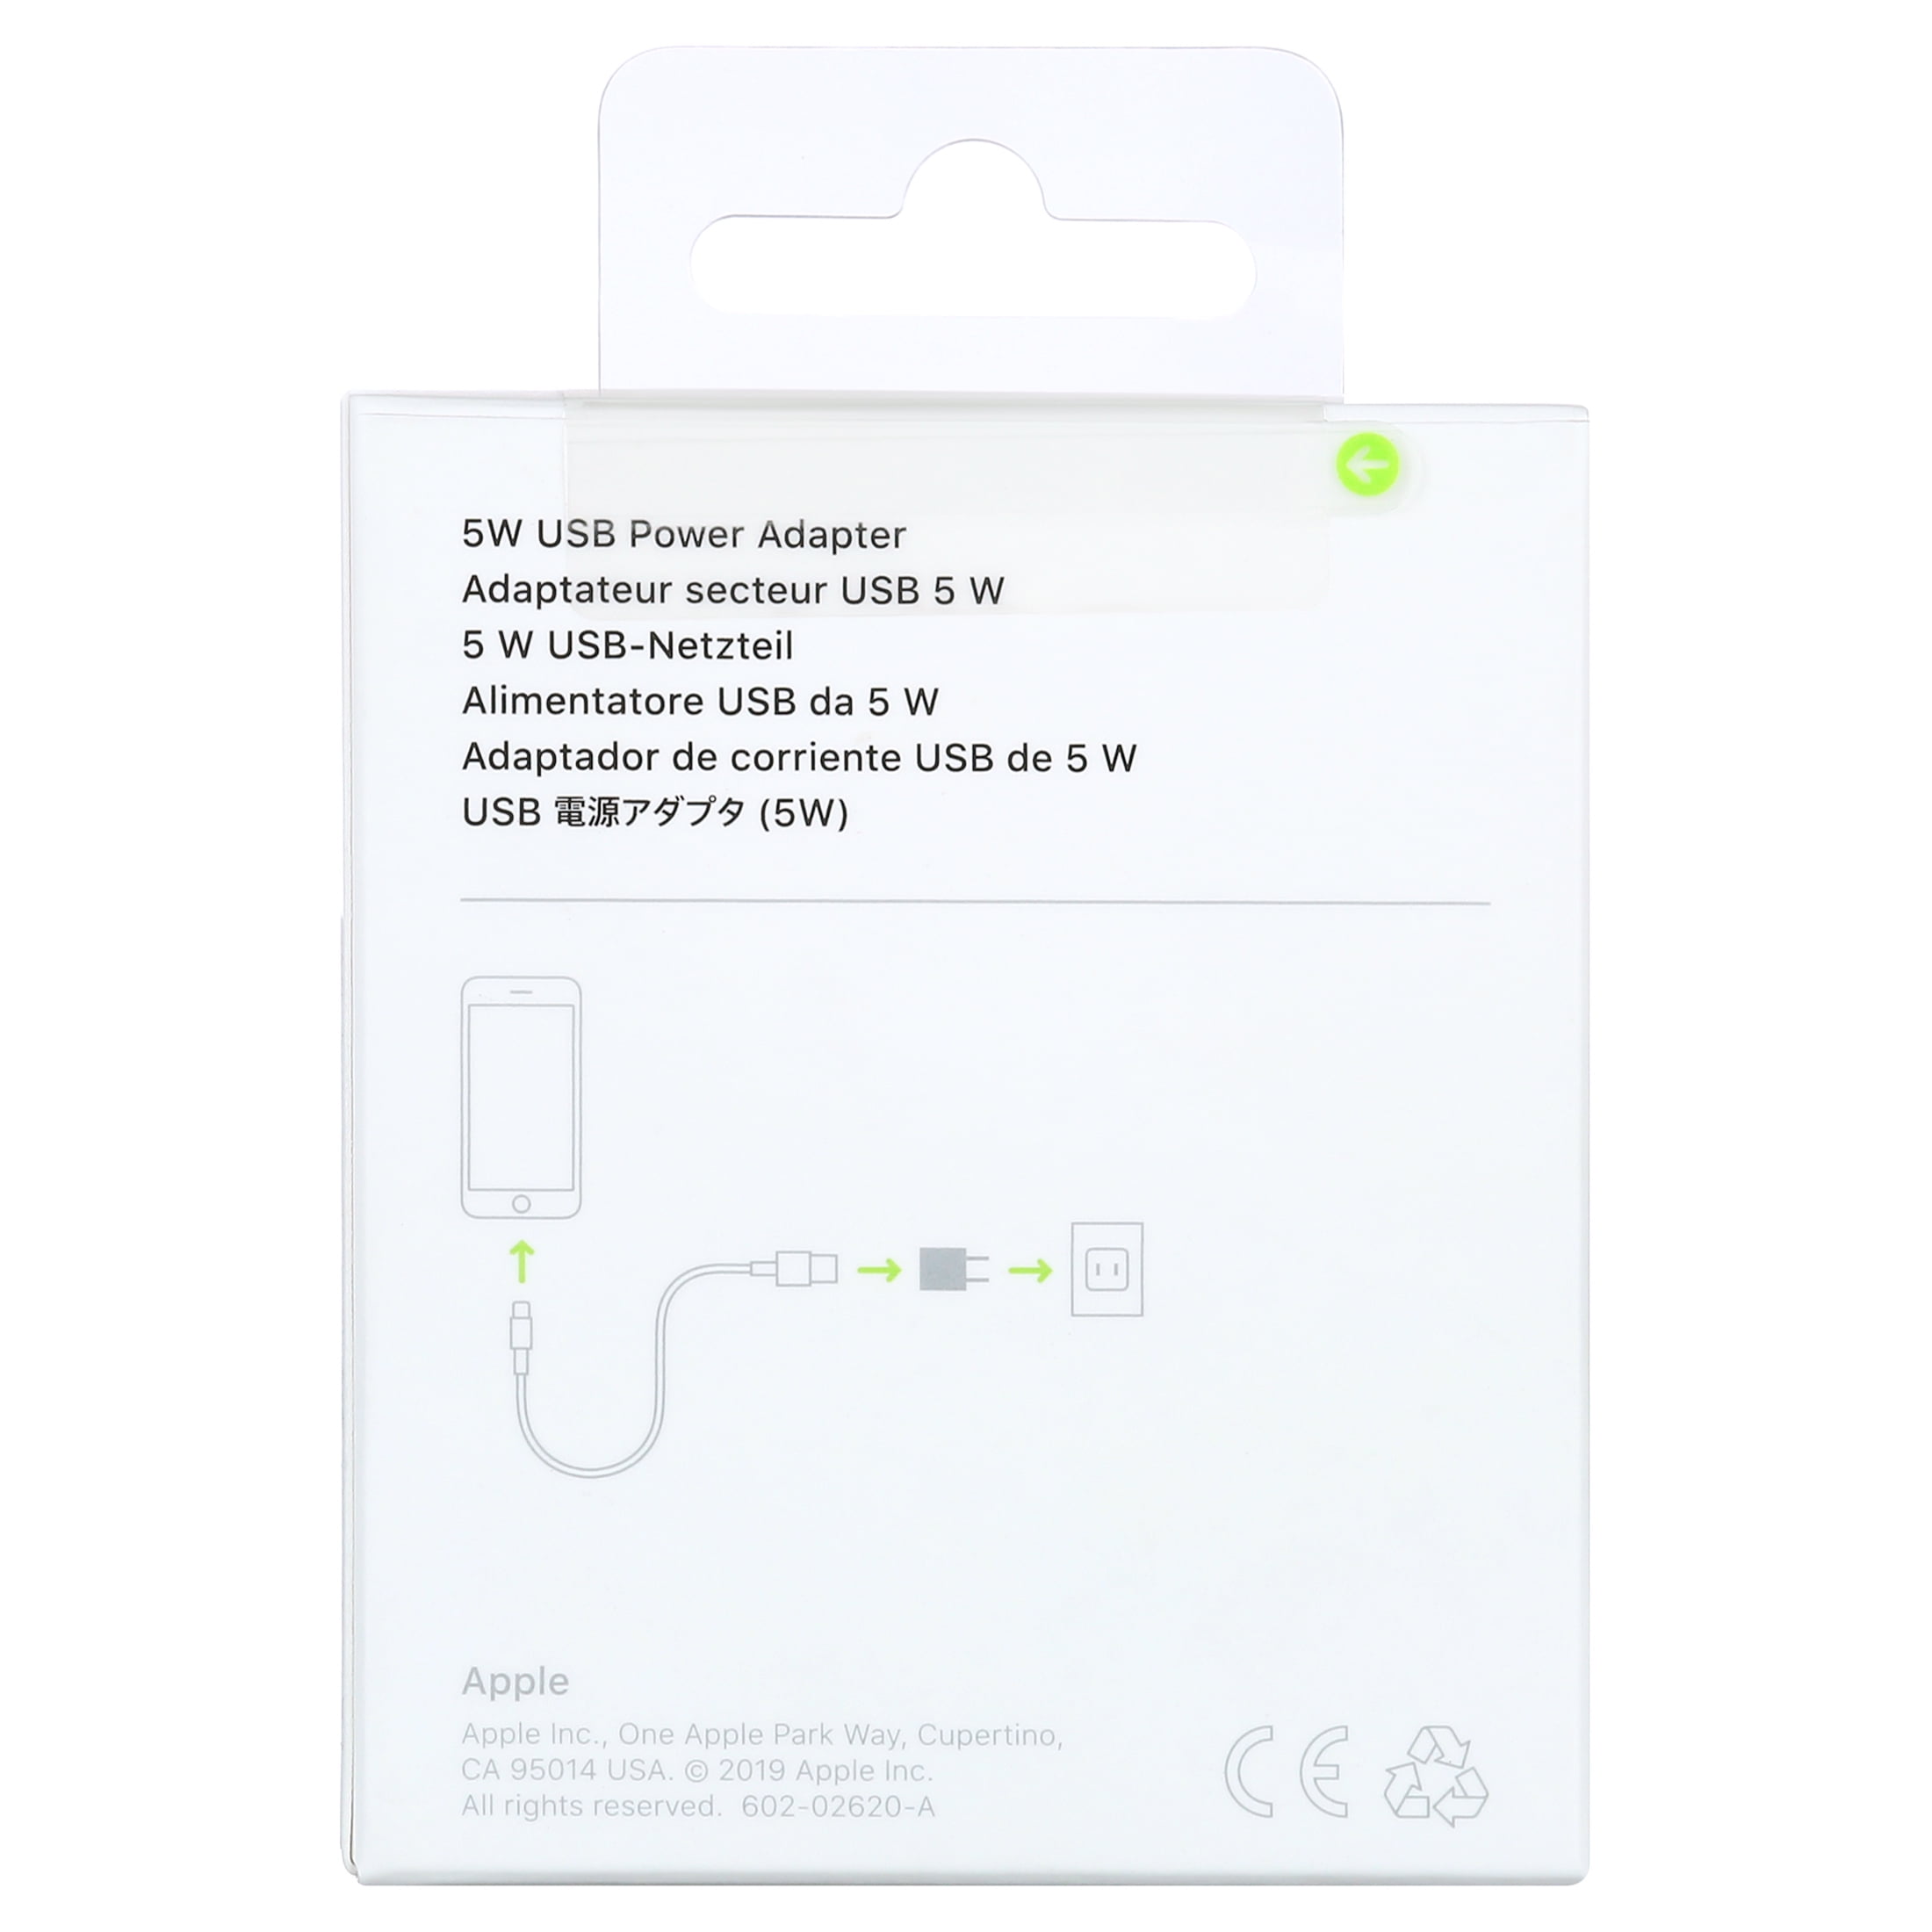 Apple USB Power Adapter Walmart.com